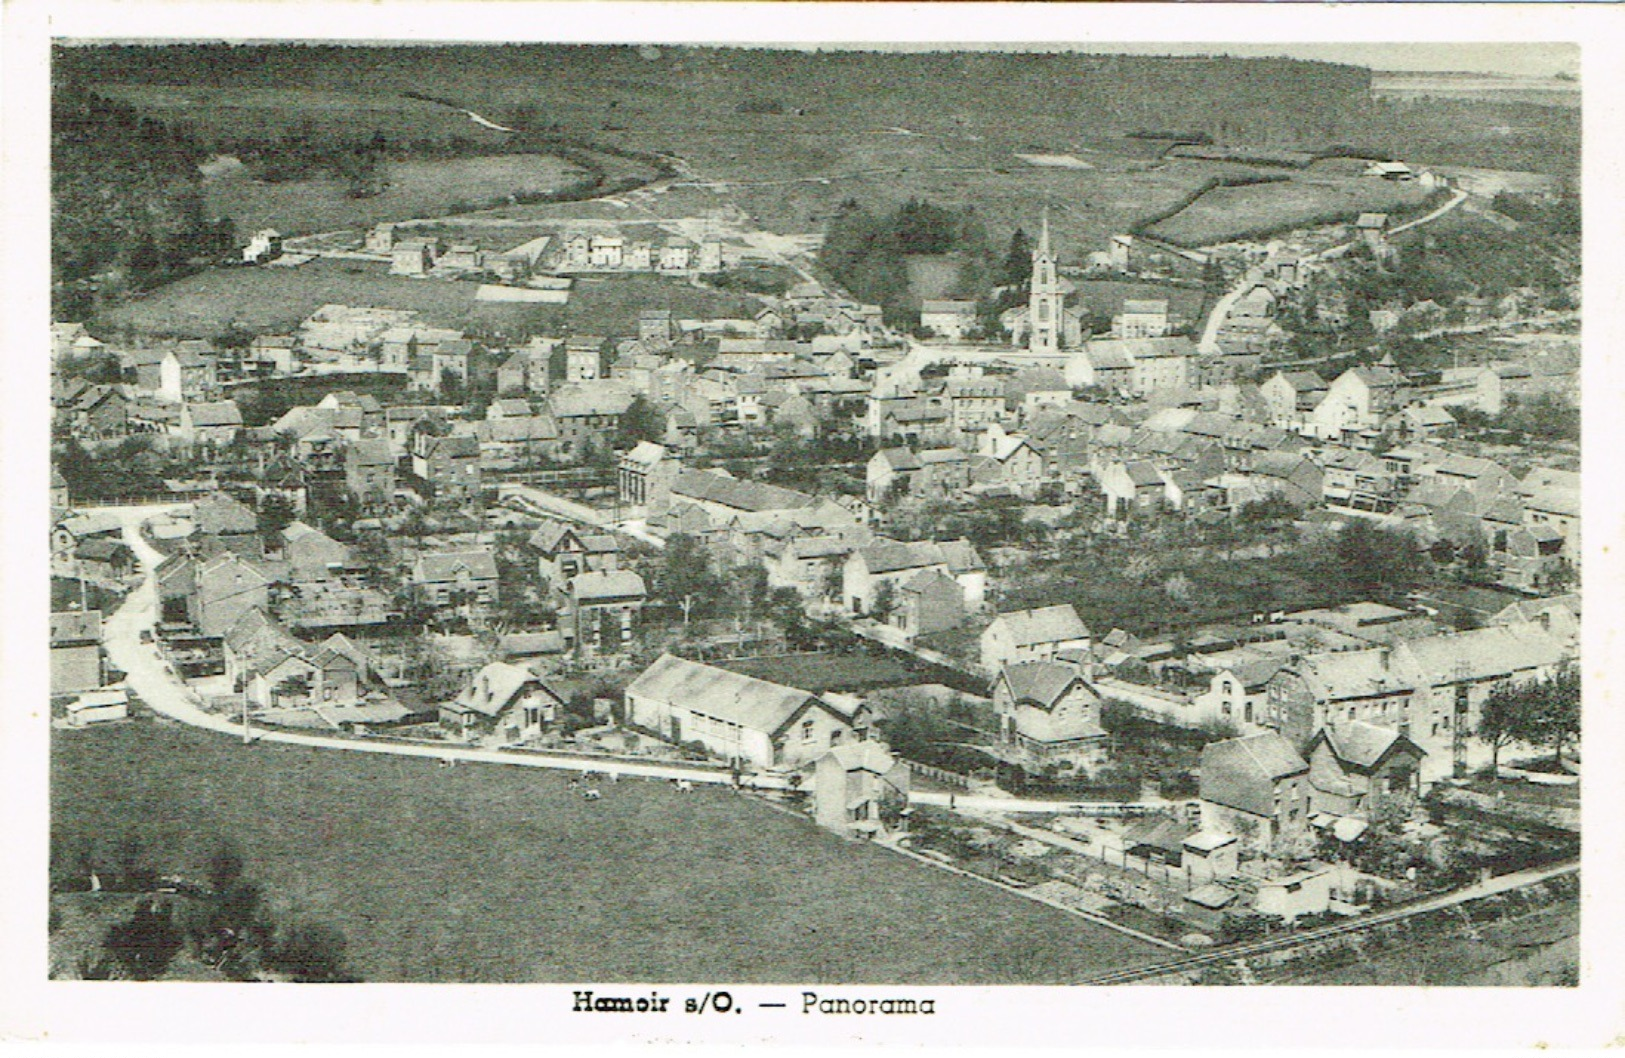 Hamoir S/O. - Panorama - Hamoir